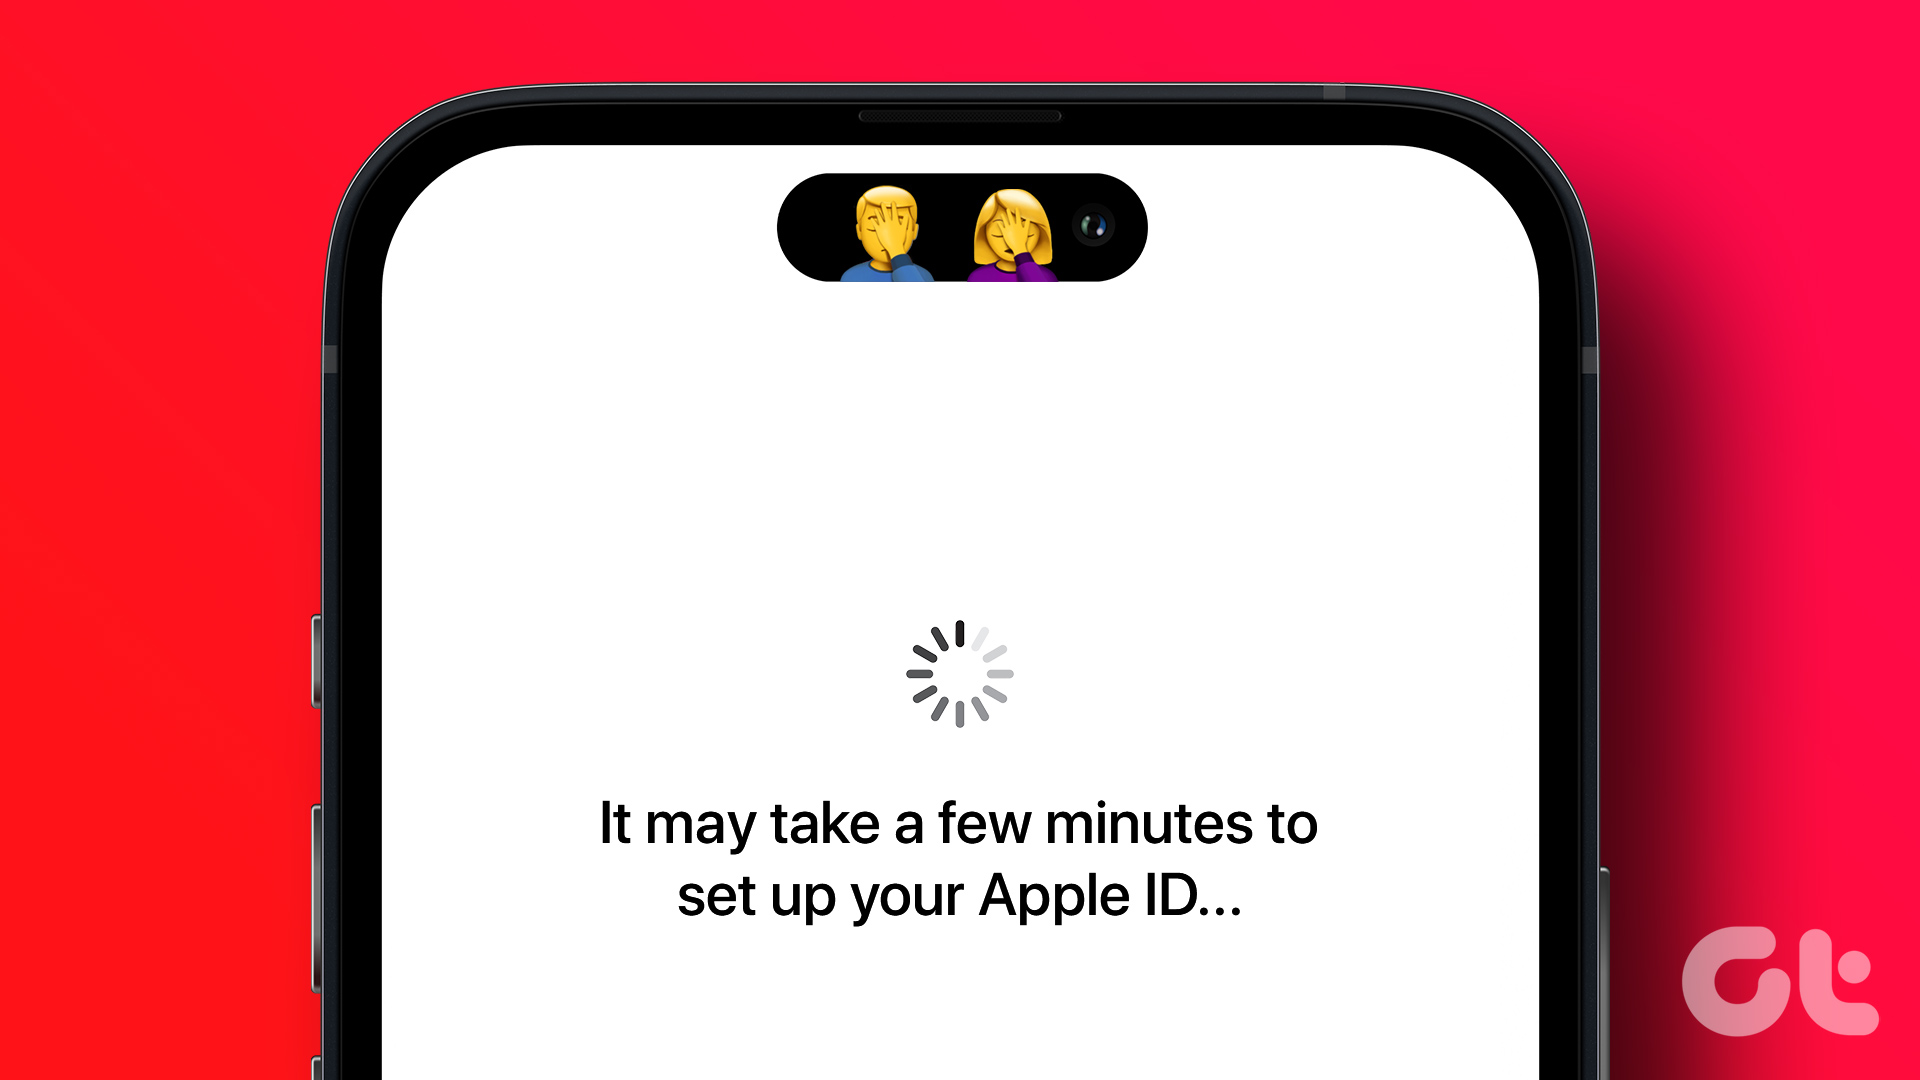 iPhone stuck on setting up Apple ID